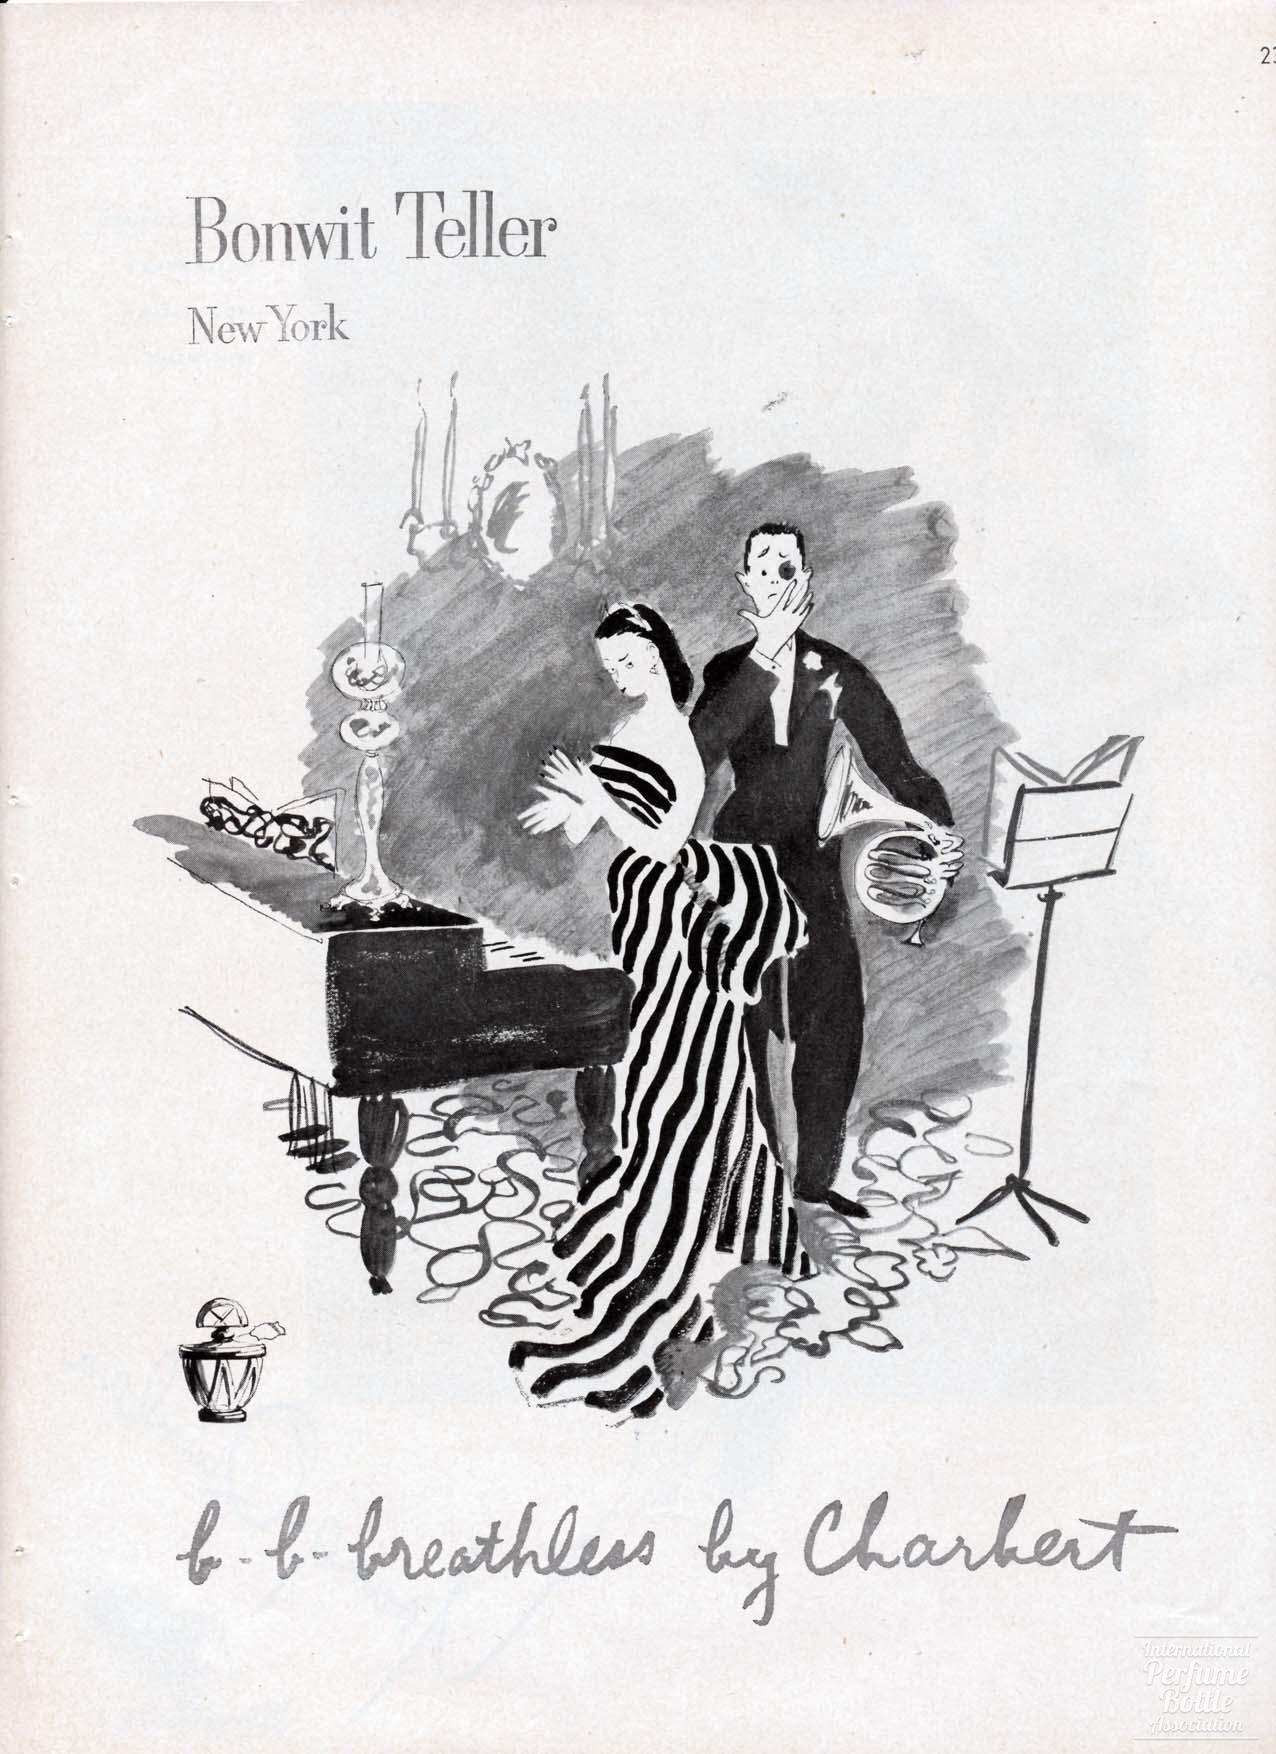 "Breathless" by Charbert Advertisement - 1946